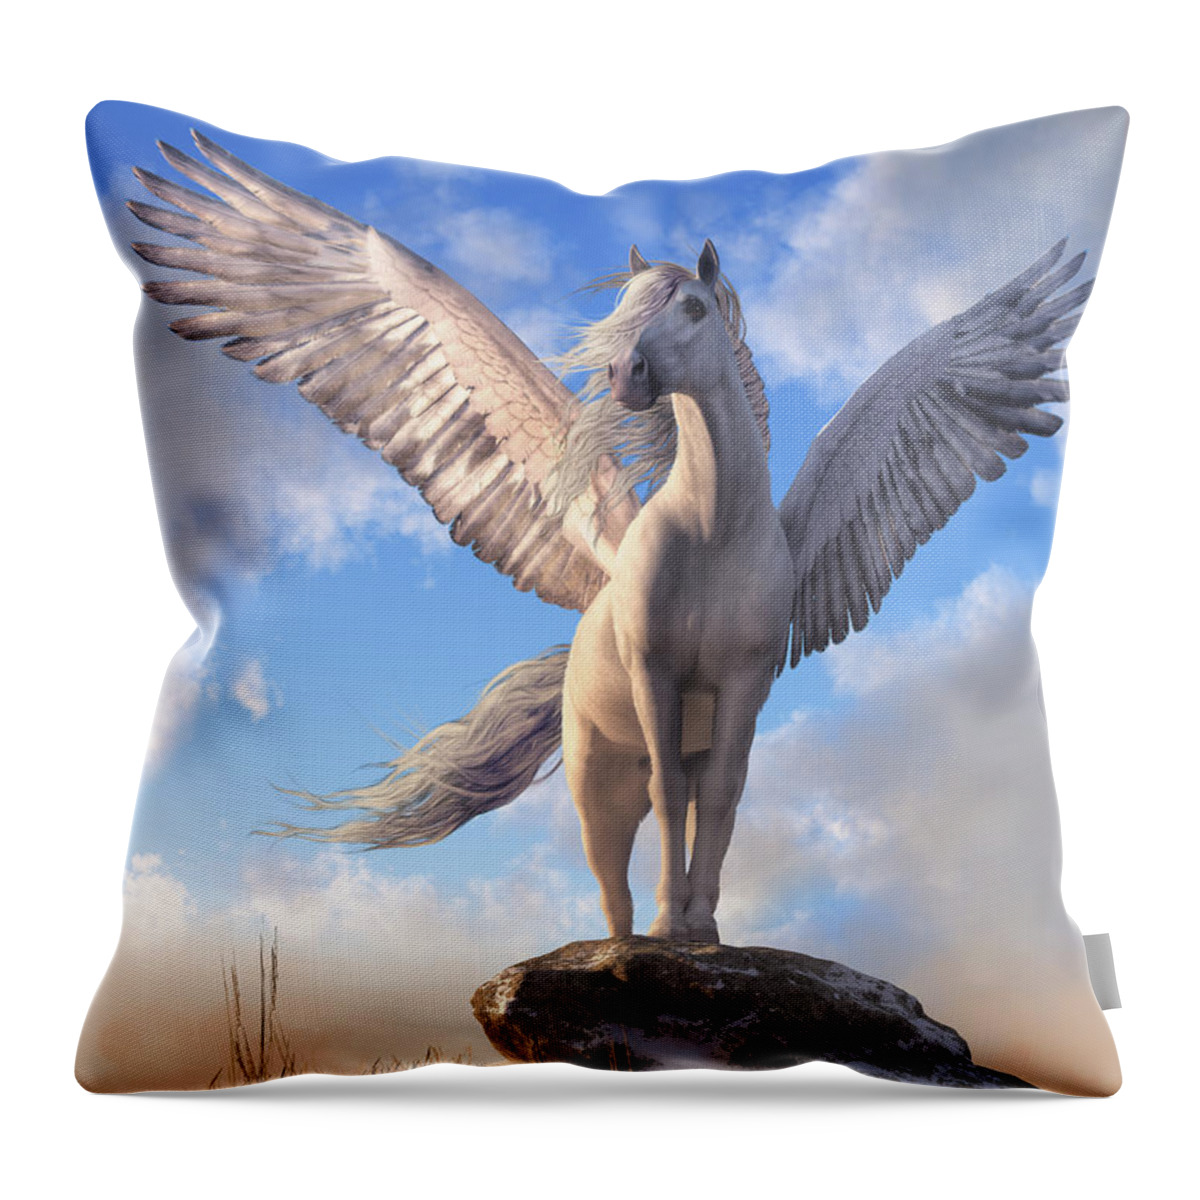 Pegasus Throw Pillow featuring the digital art Pegasus The Winged Horse by Daniel Eskridge